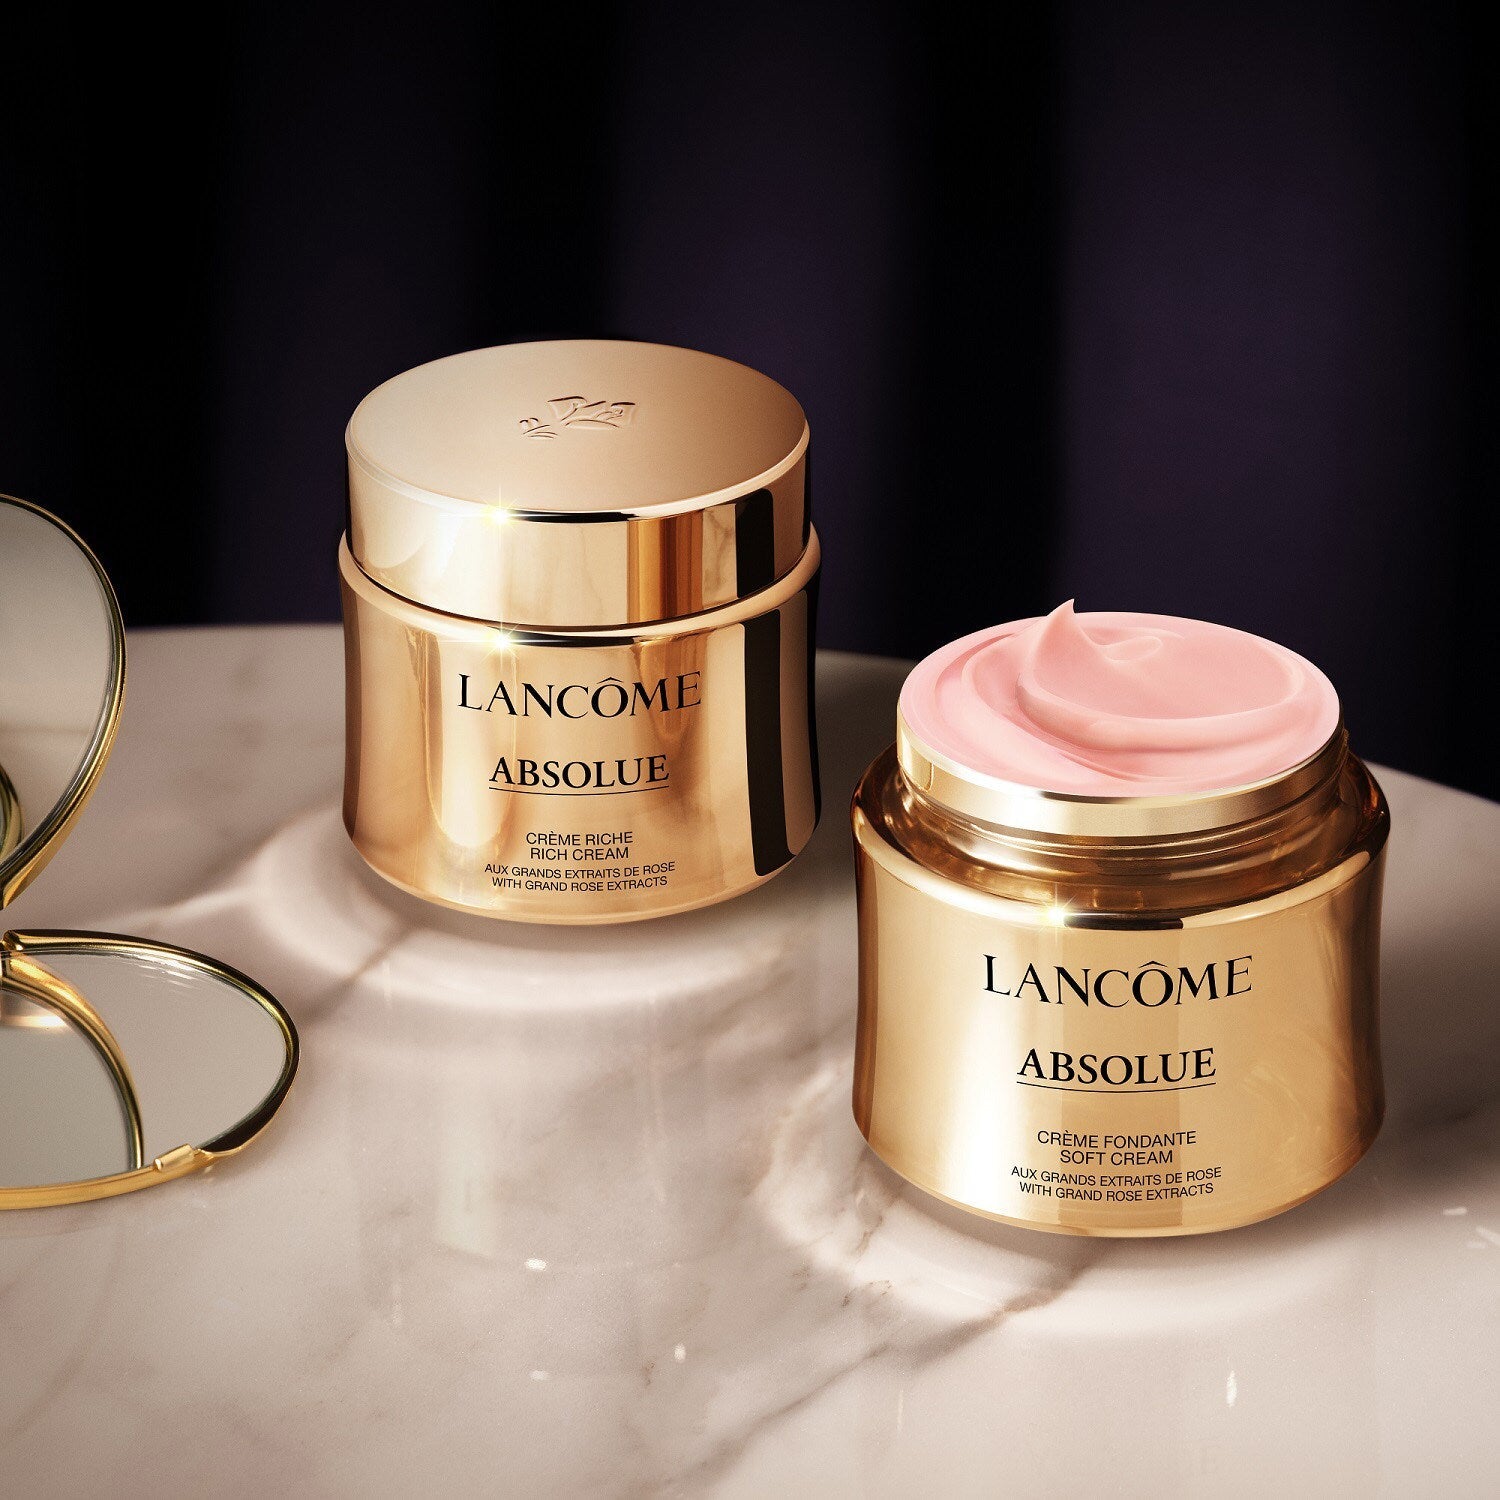 Lancome Absolue Creme Riche Rich Skin Cream | My Perfume Shop Australia